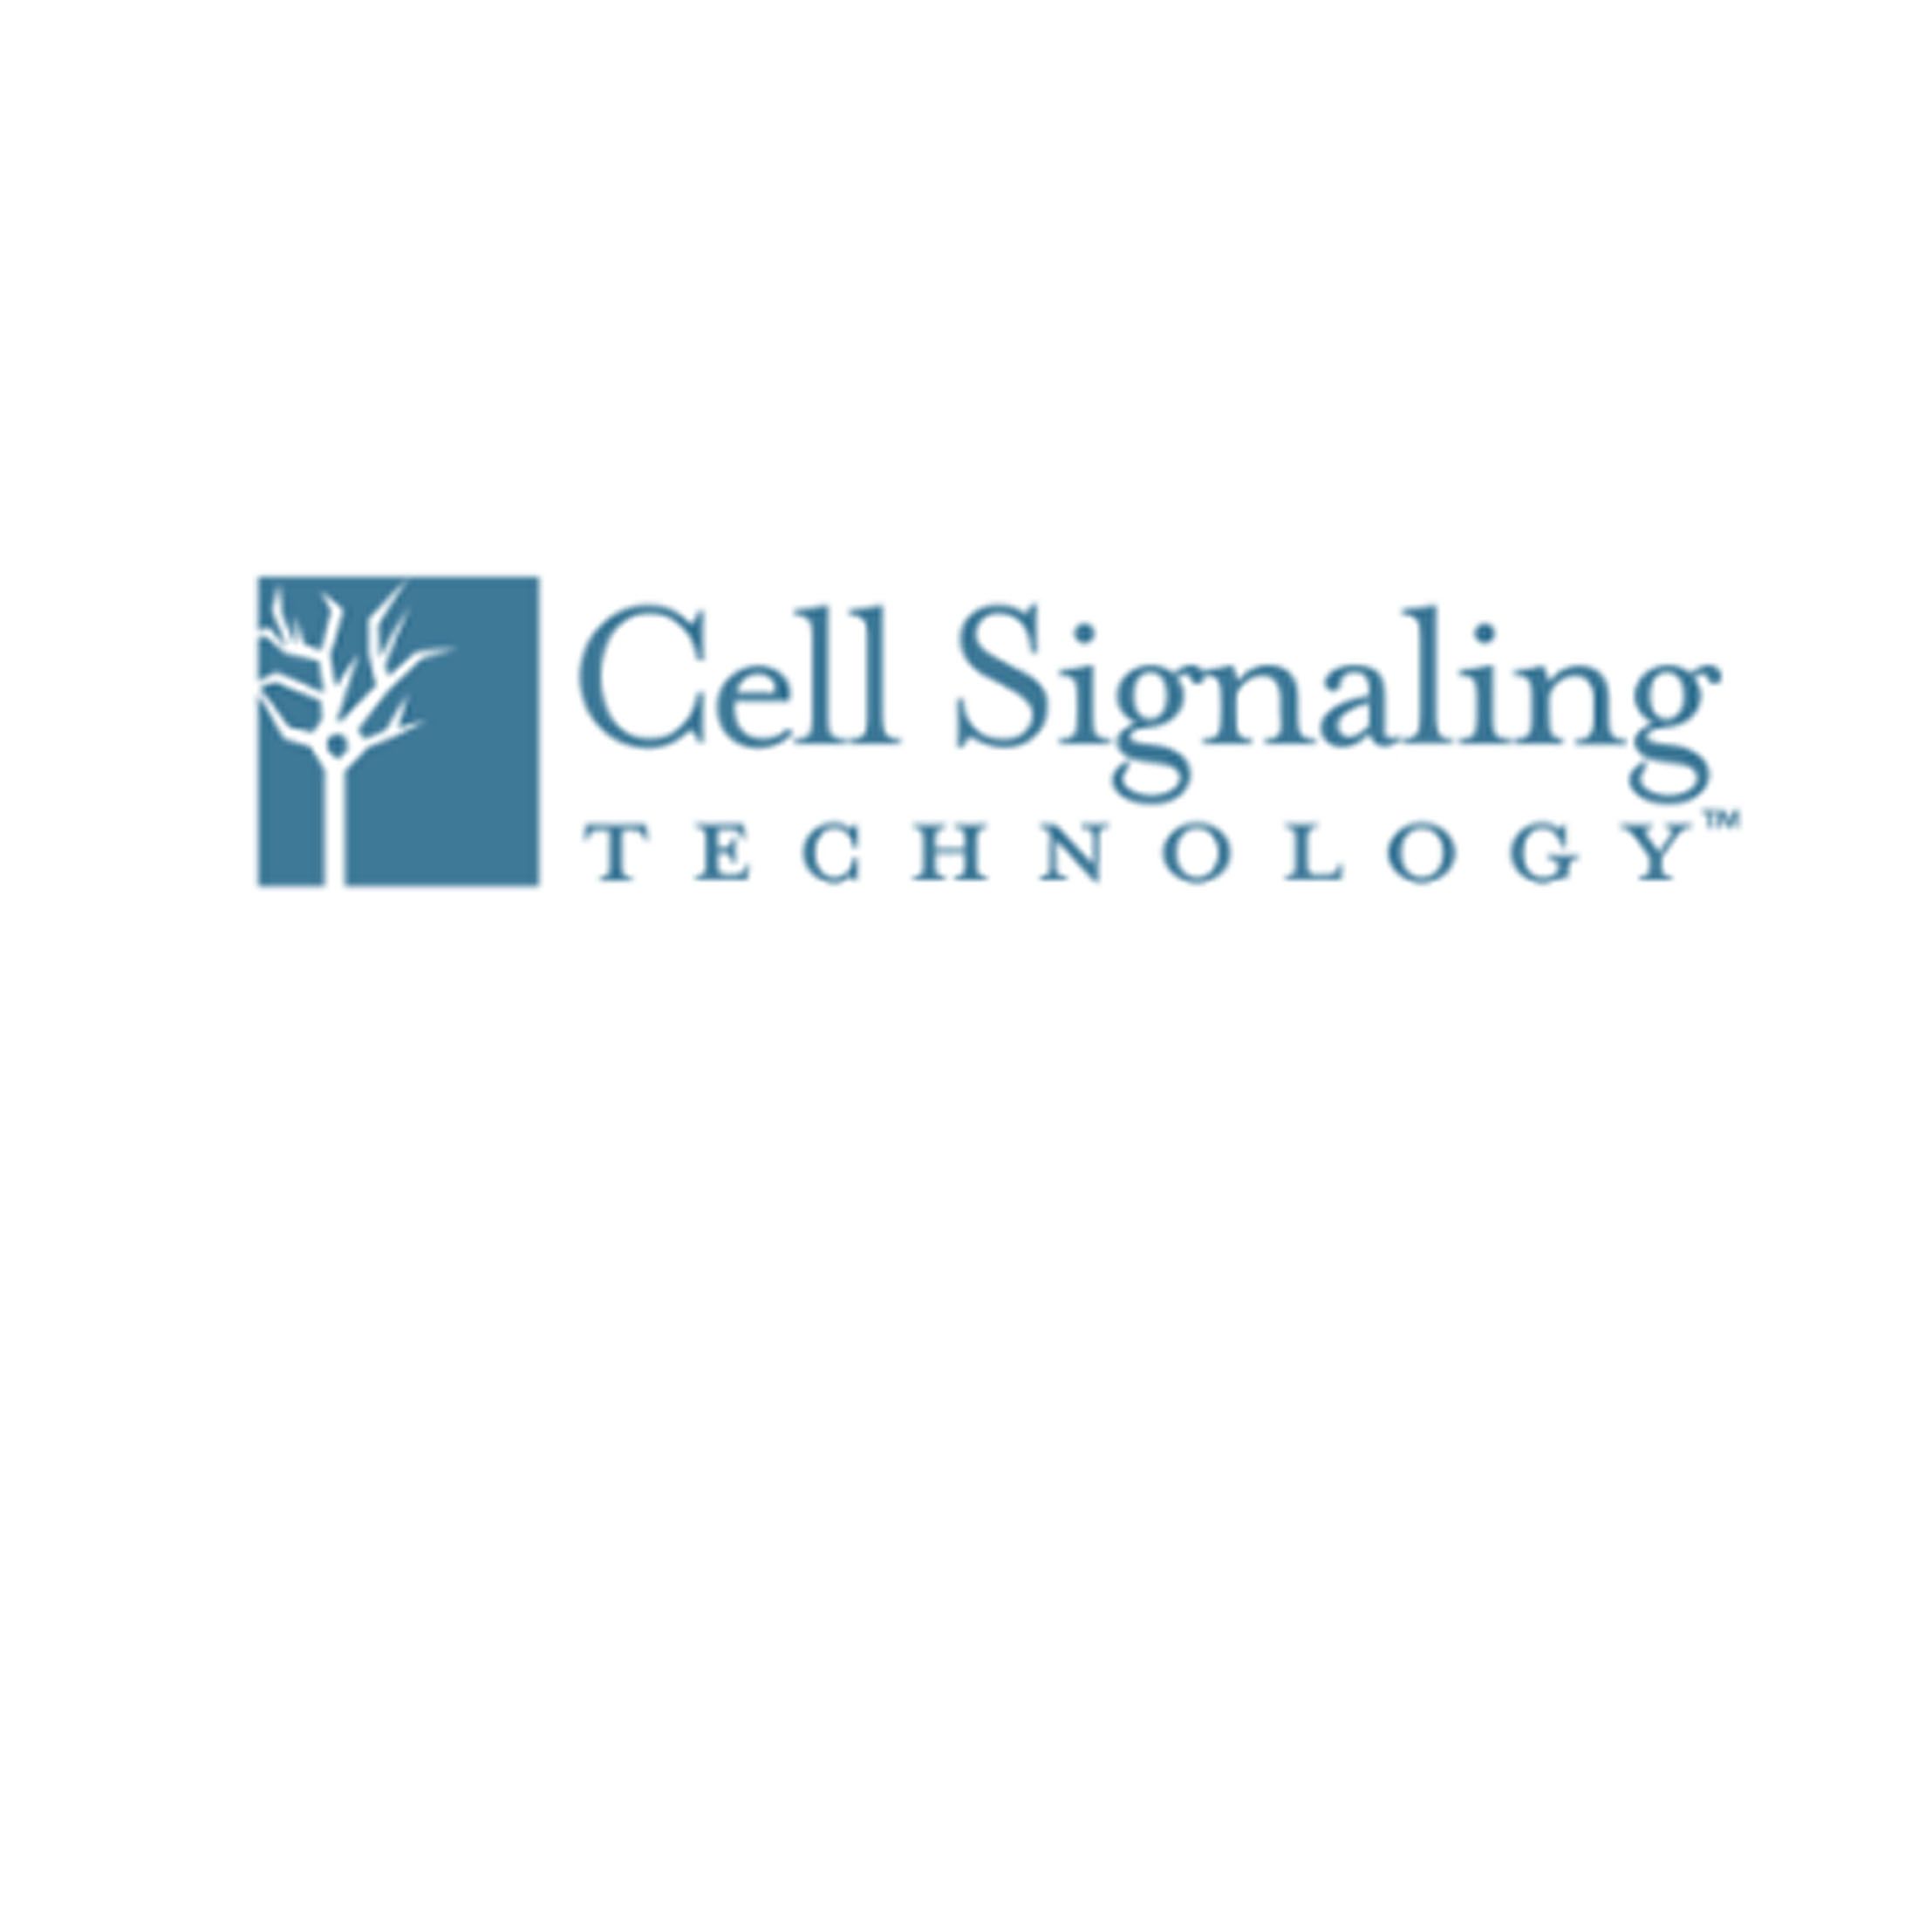 Cell Signaling抗体及磷酸化抗体、ELISA试剂盒、激酶，现货